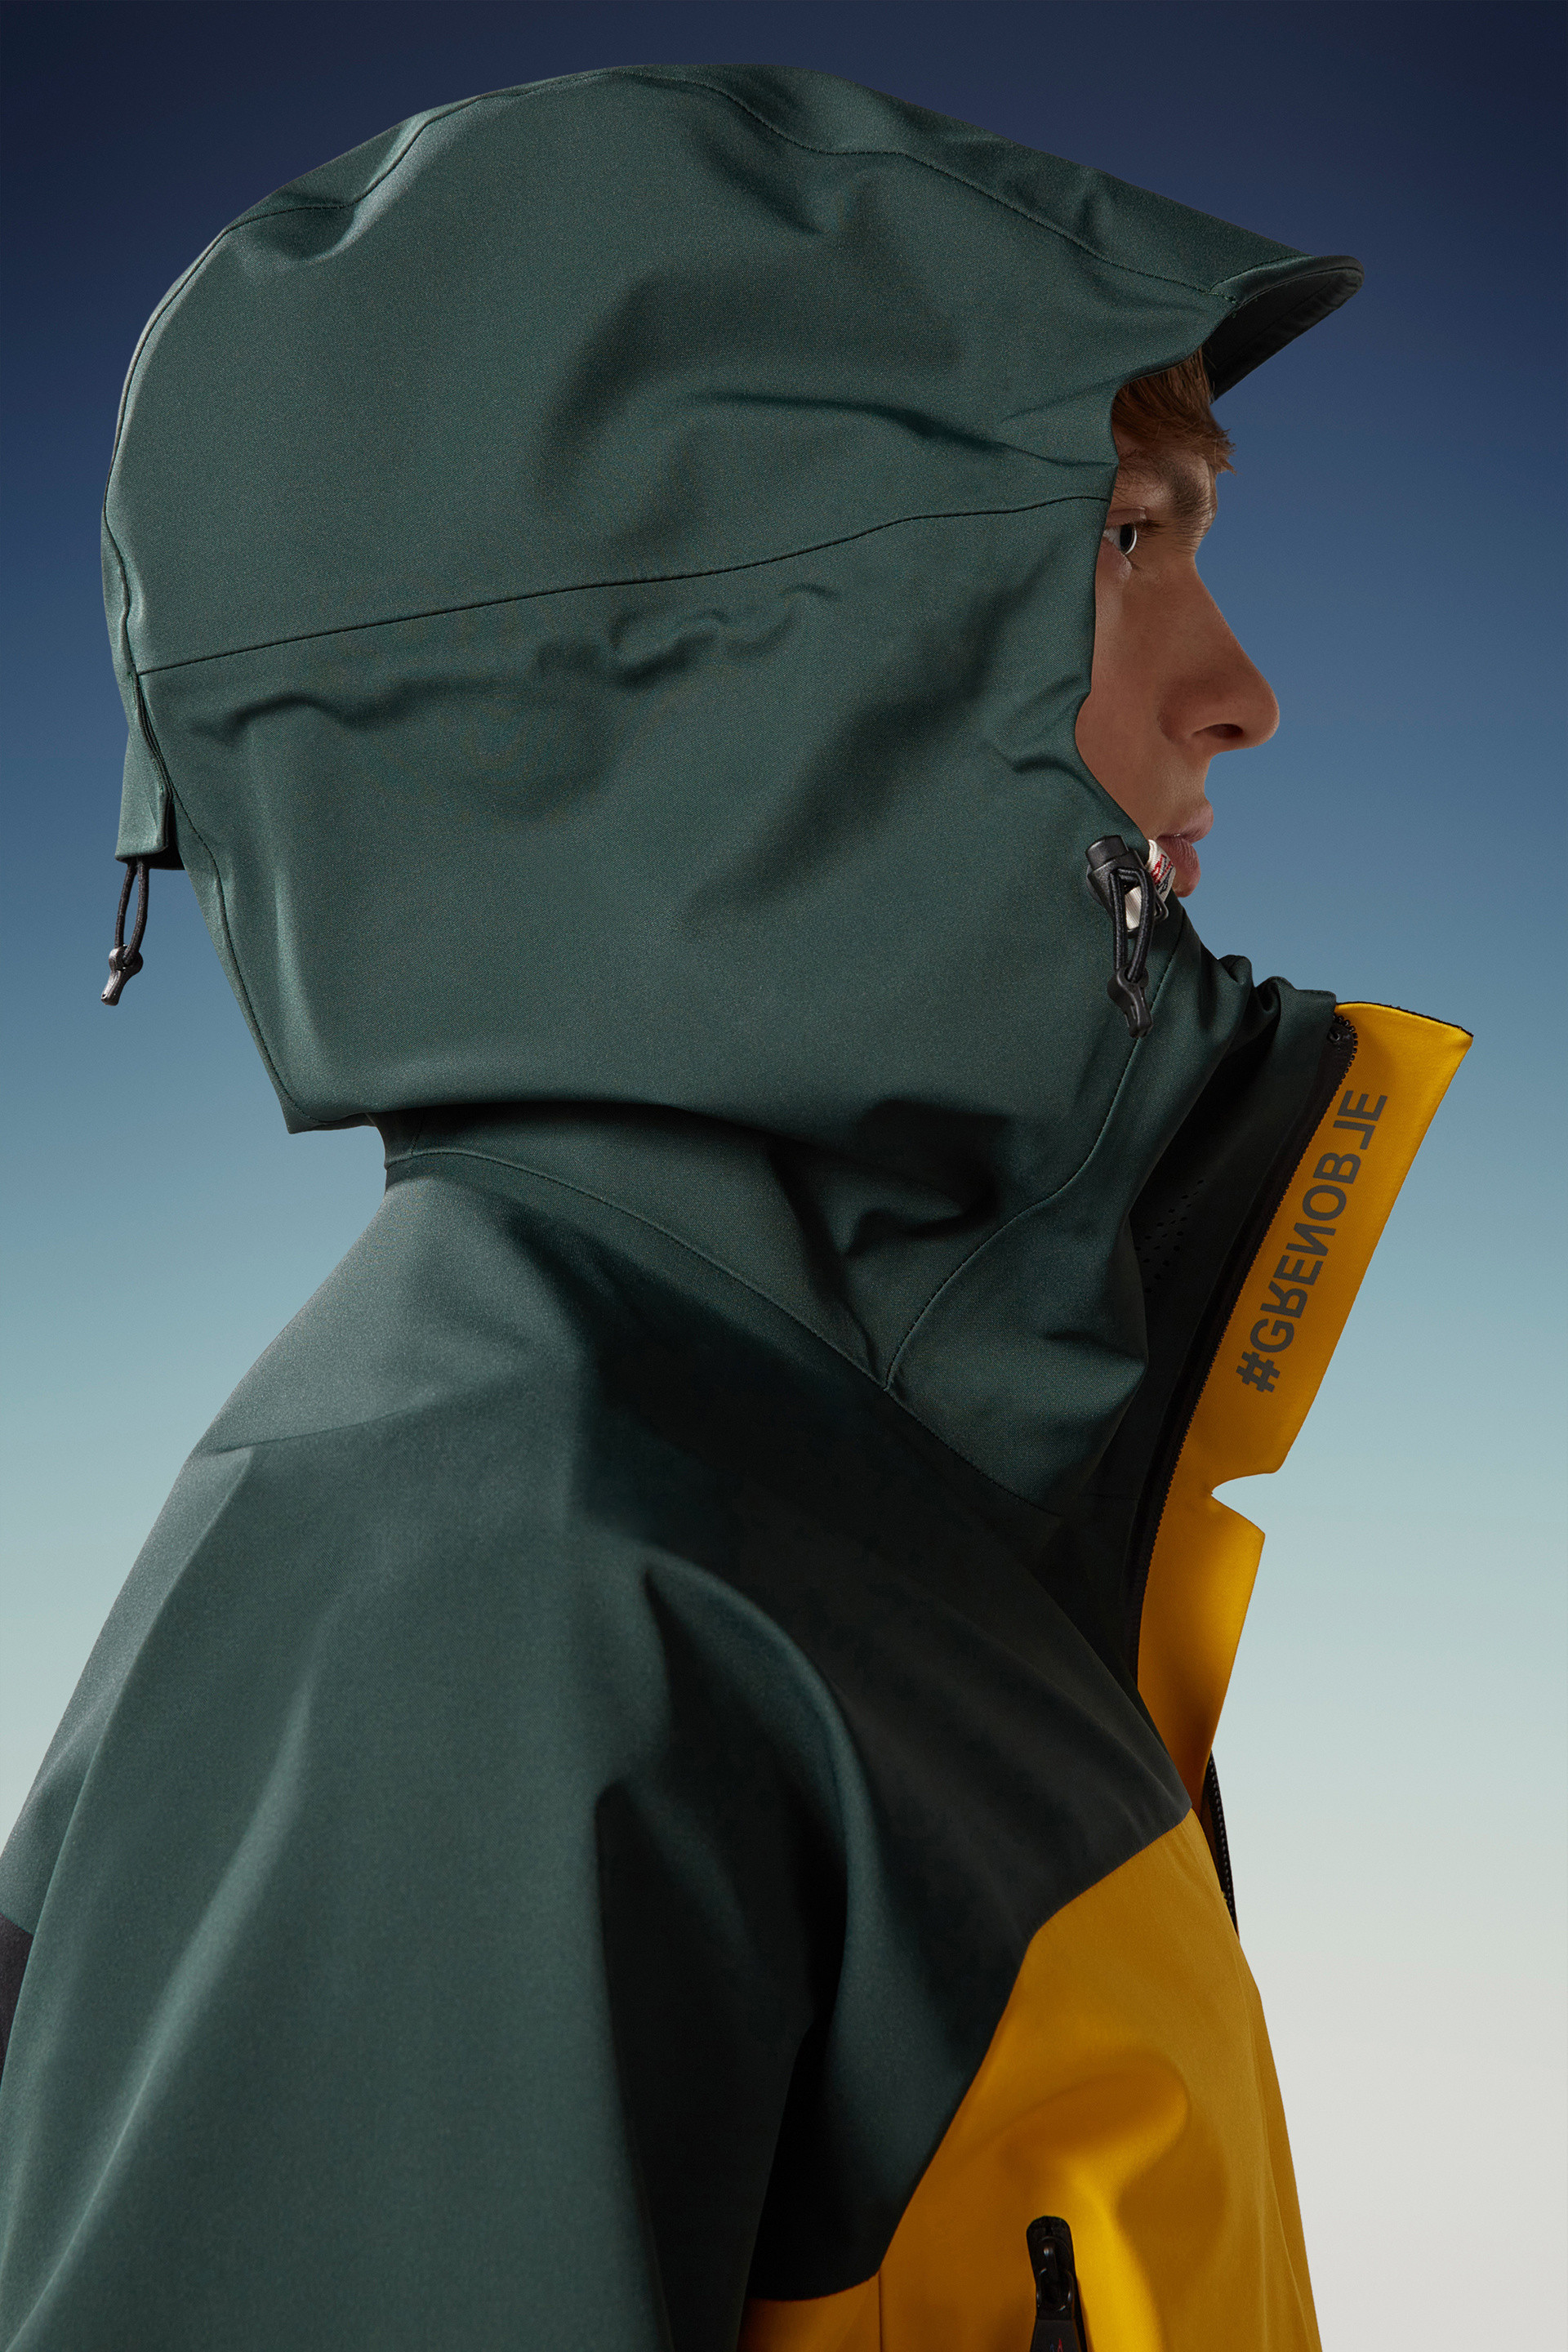 Black Moriond Ski Jacket - Windbreakers & Raincoats for Men